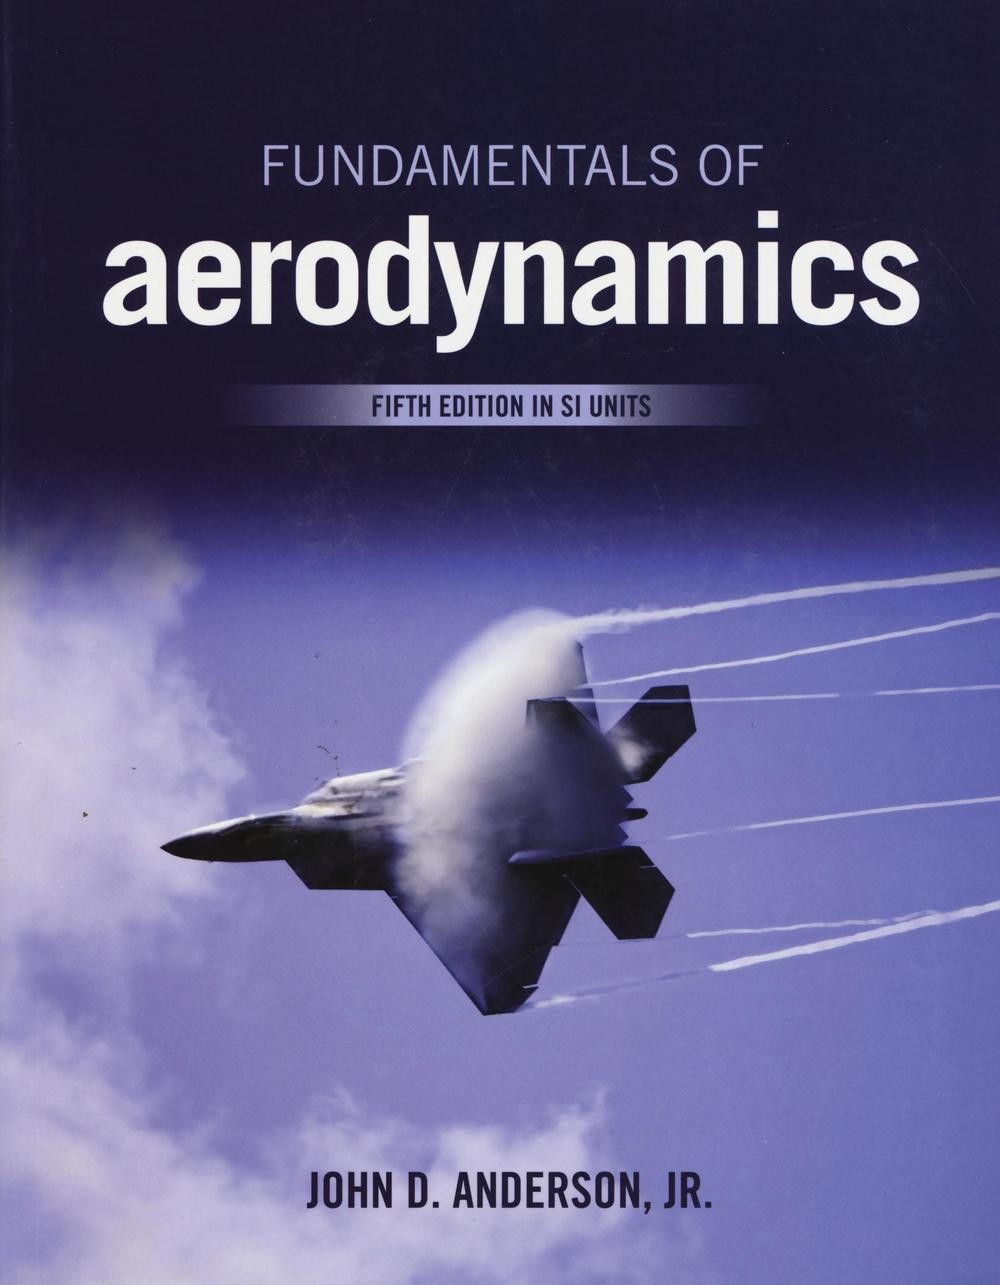 Fundamentals of aerodynamics